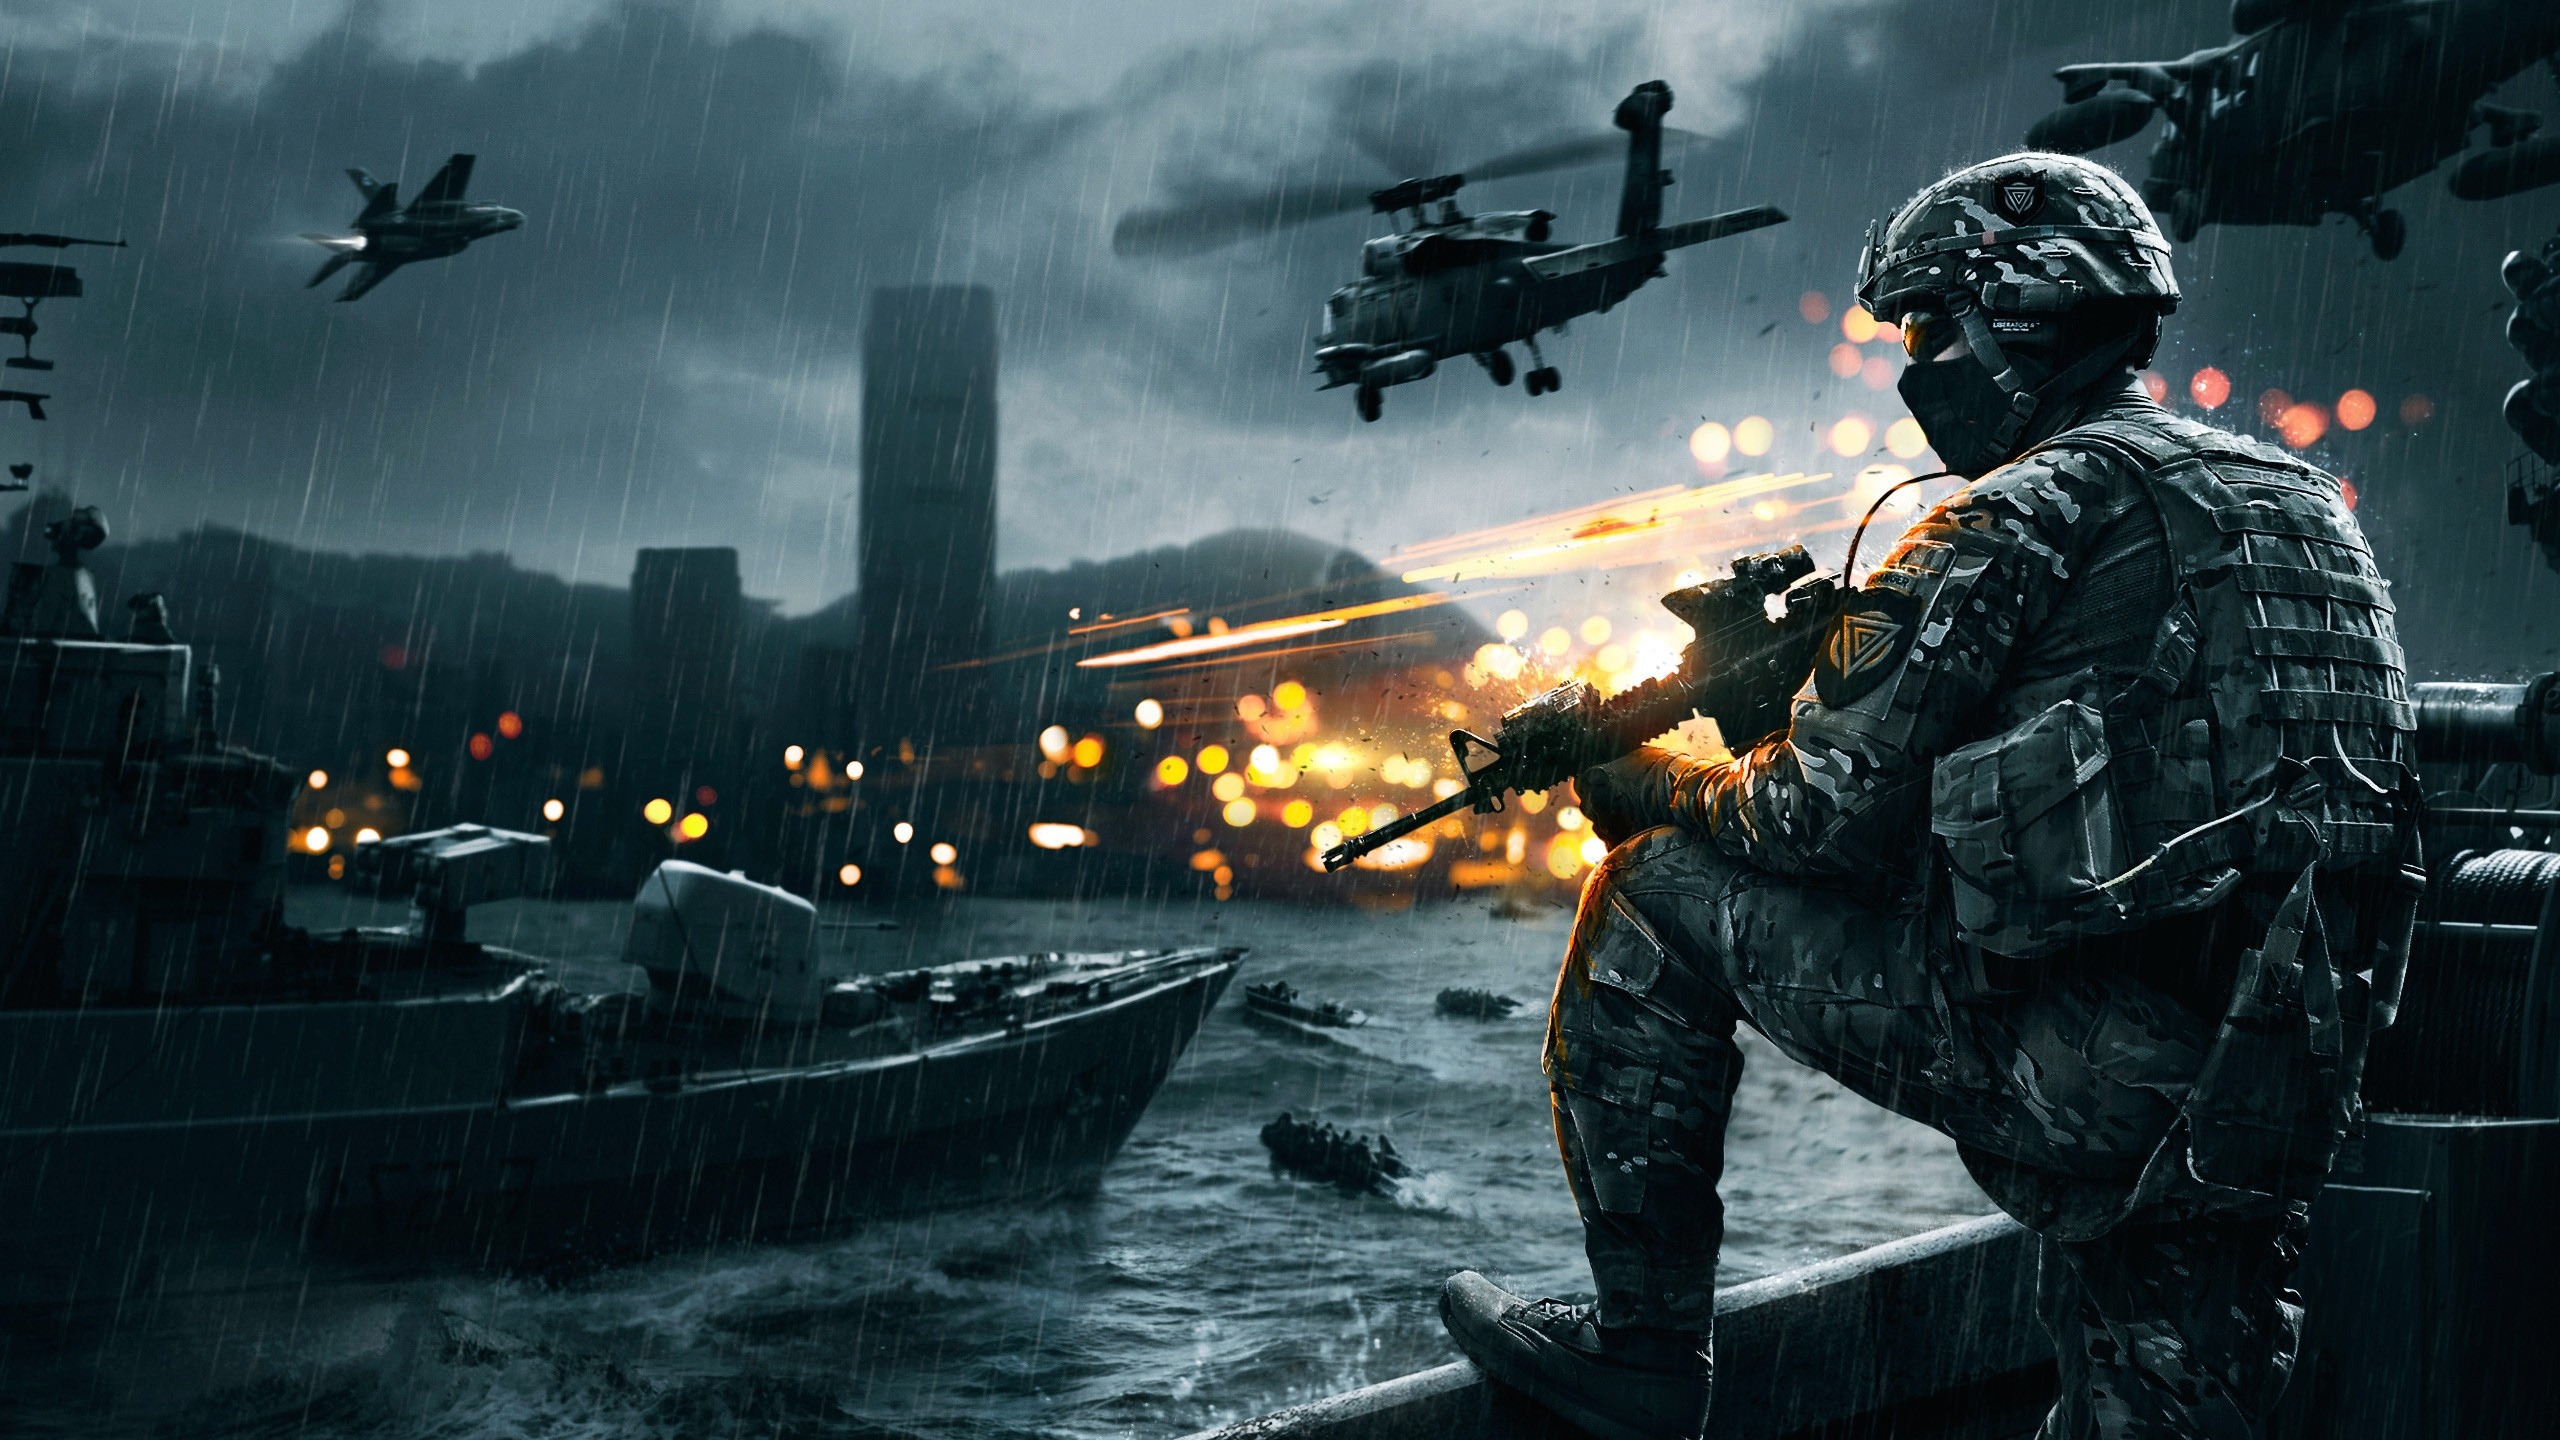 Battlefield 4 Siege of Shanghai for 2560x1440 HDTV resolution